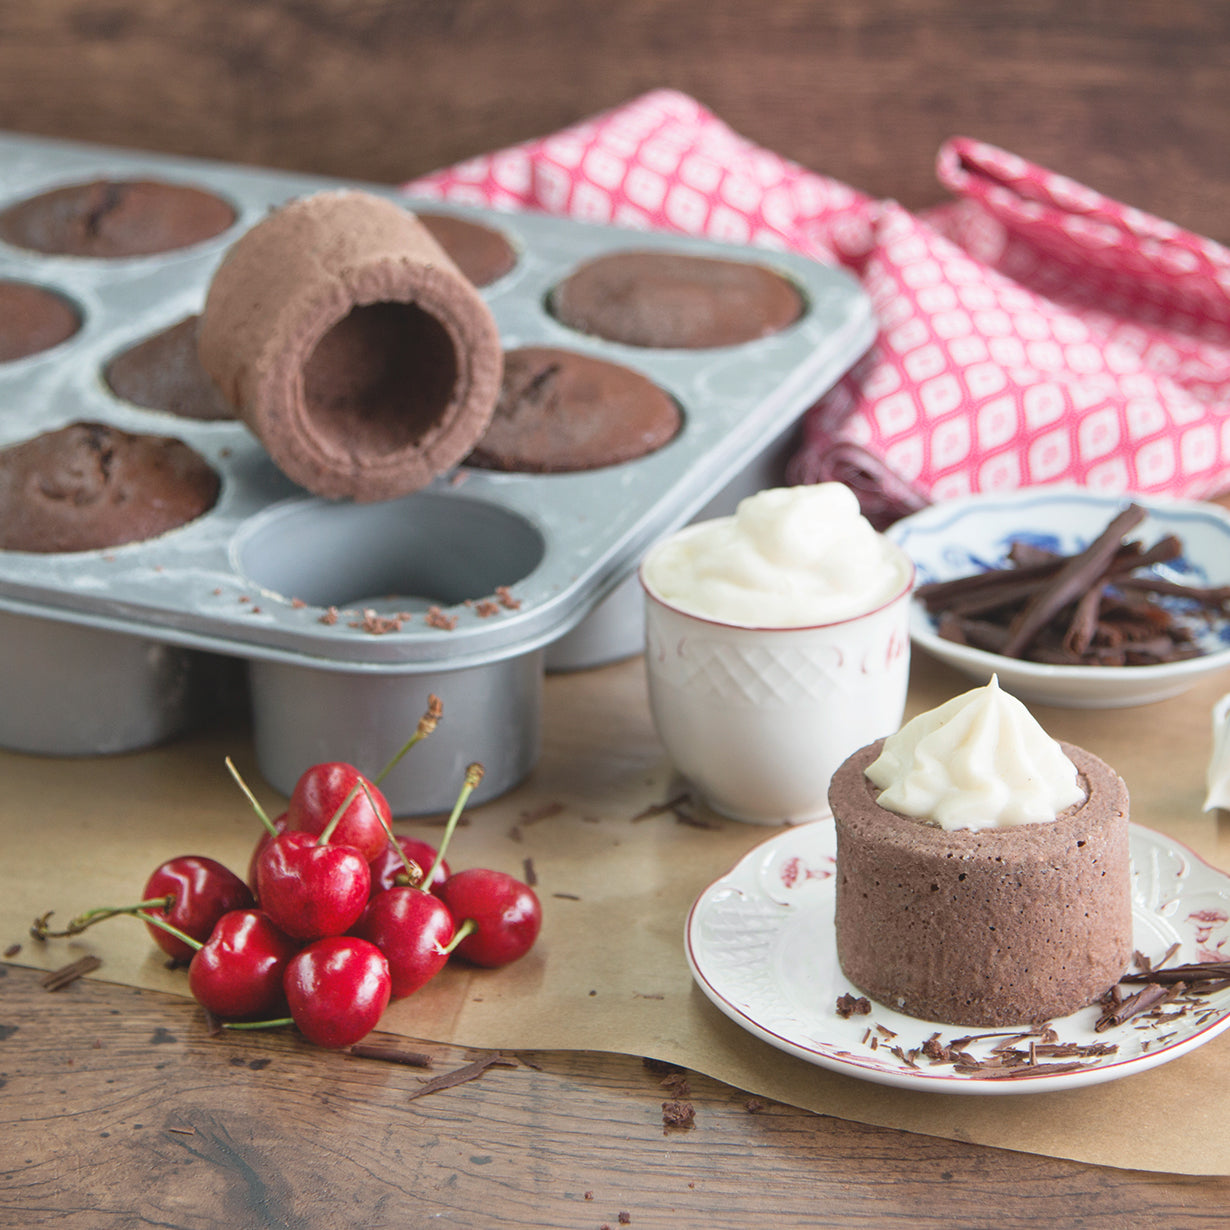 STÄDTER We love baking - Cake cups pan